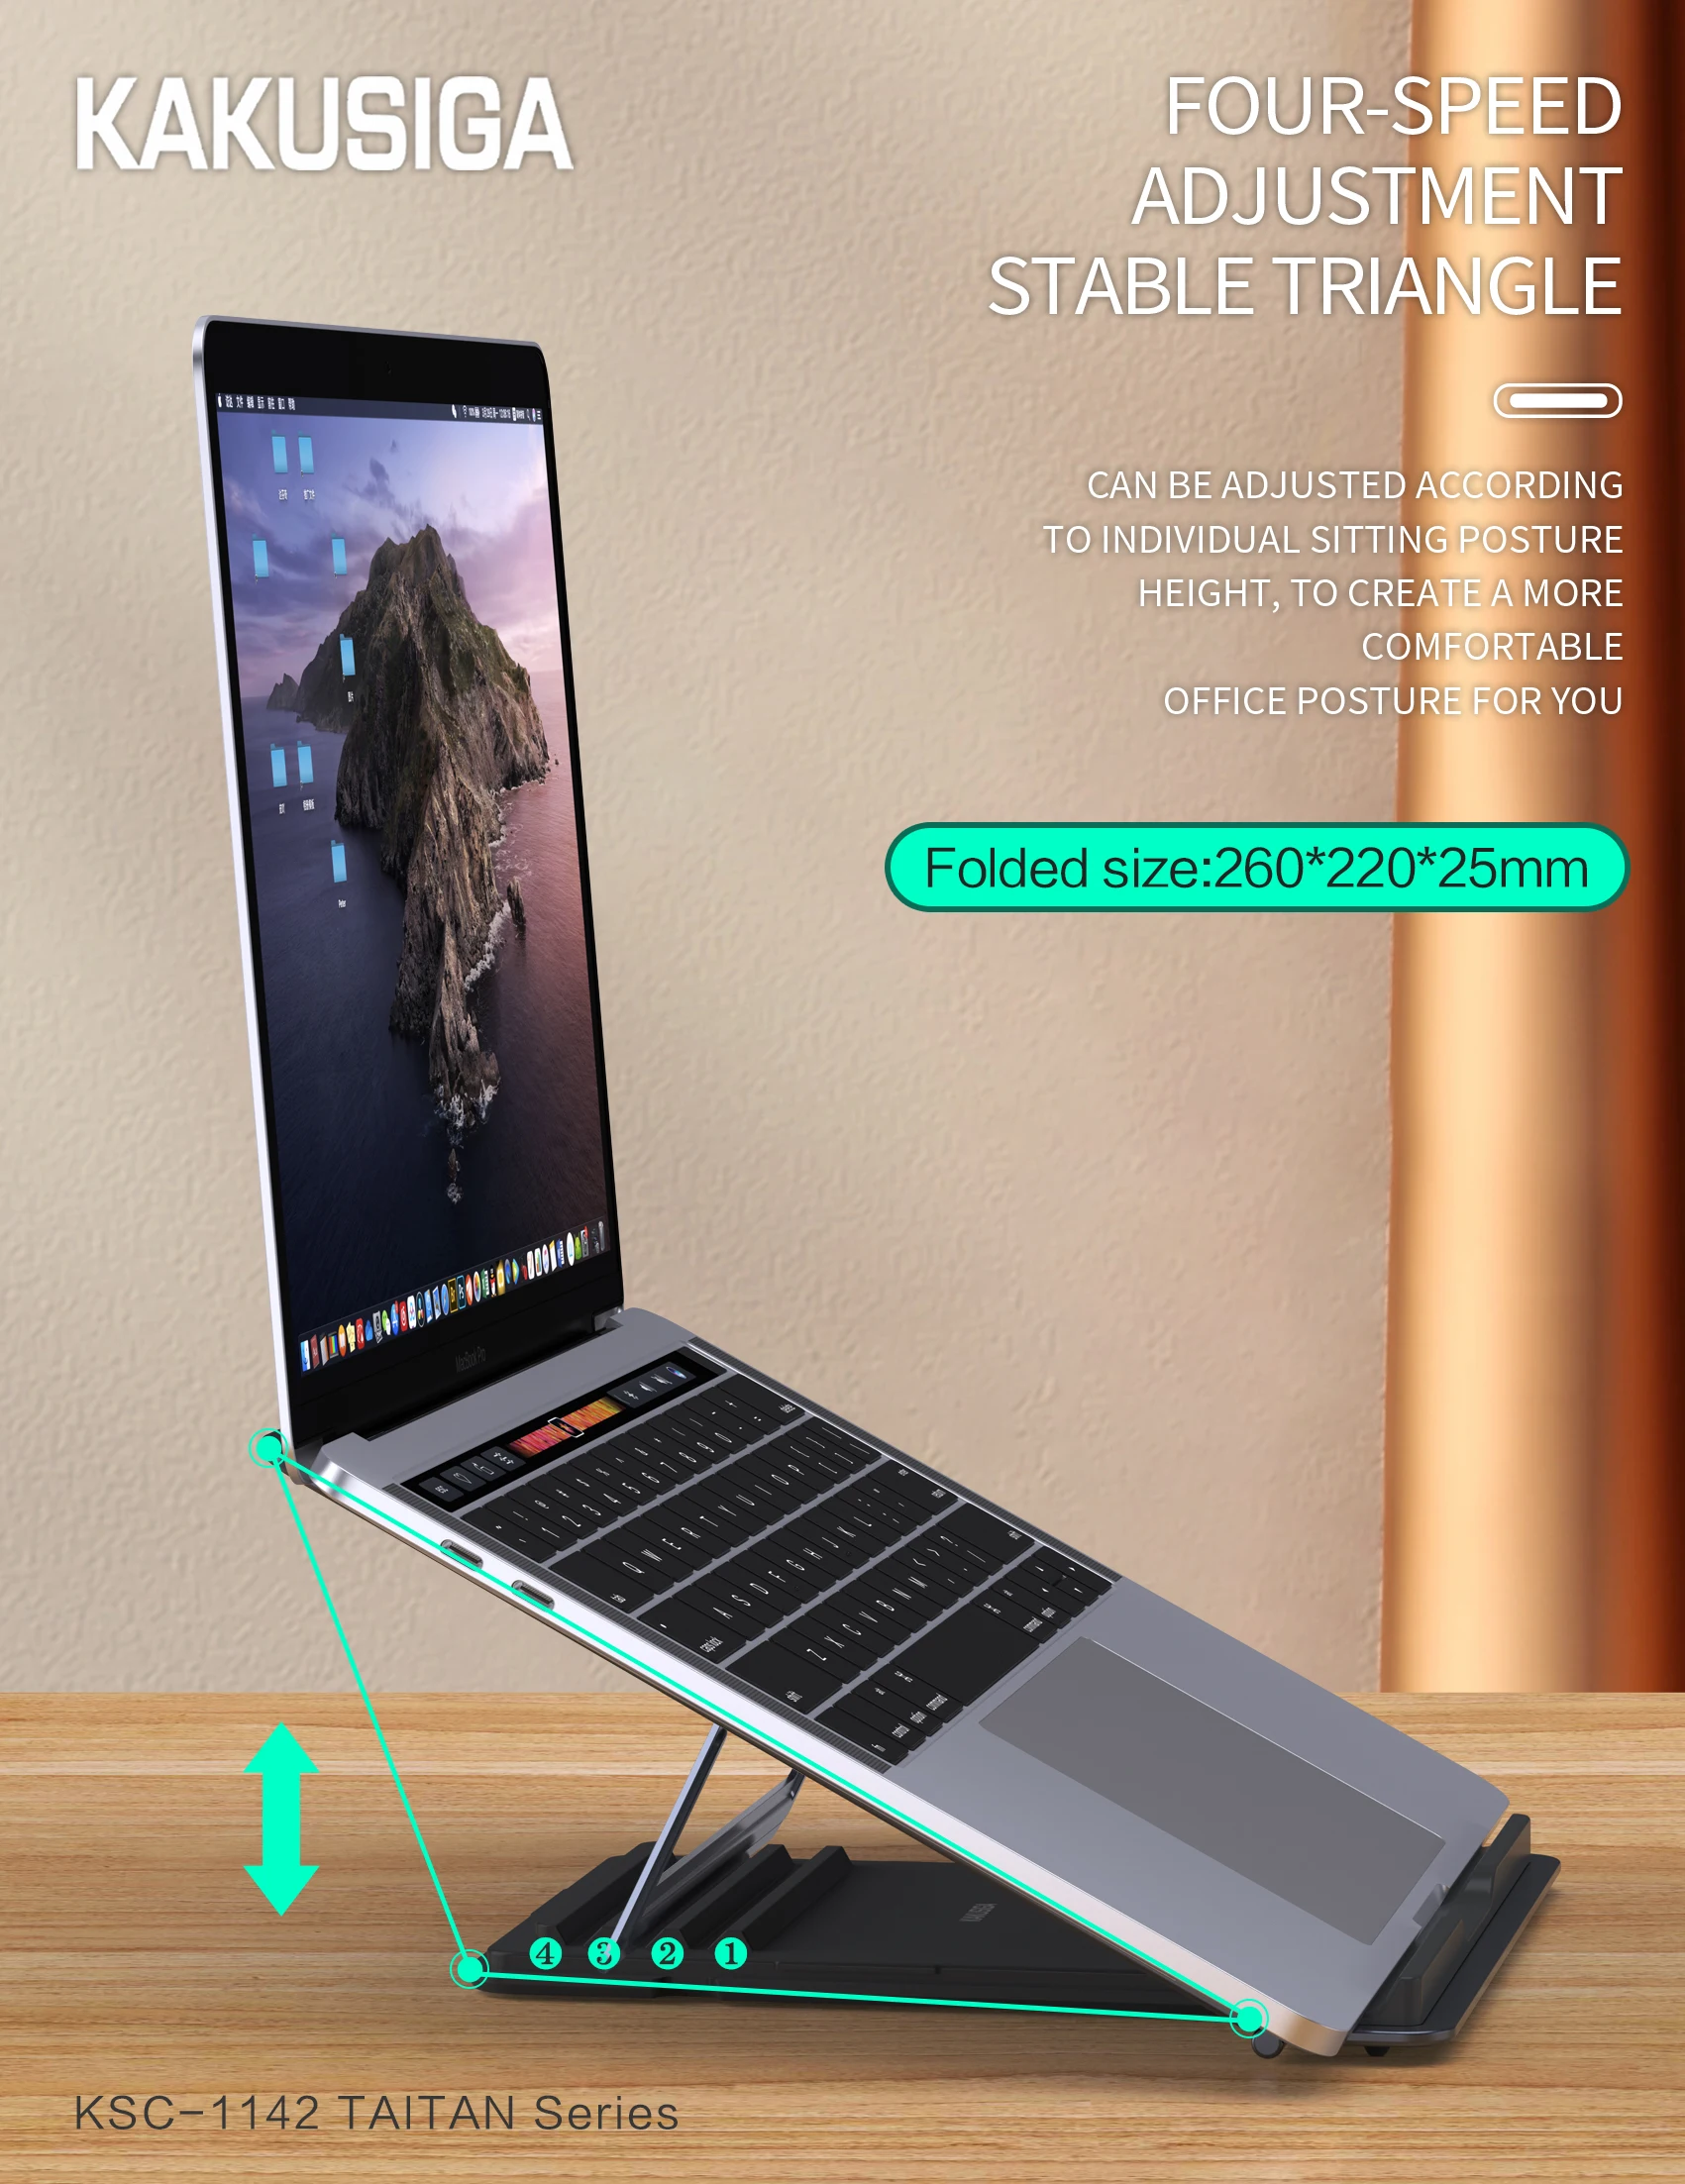 KAKUSIGA Lightweight and portable 4 speed adjustment stable triangle Metal Laptop Desktop Stand